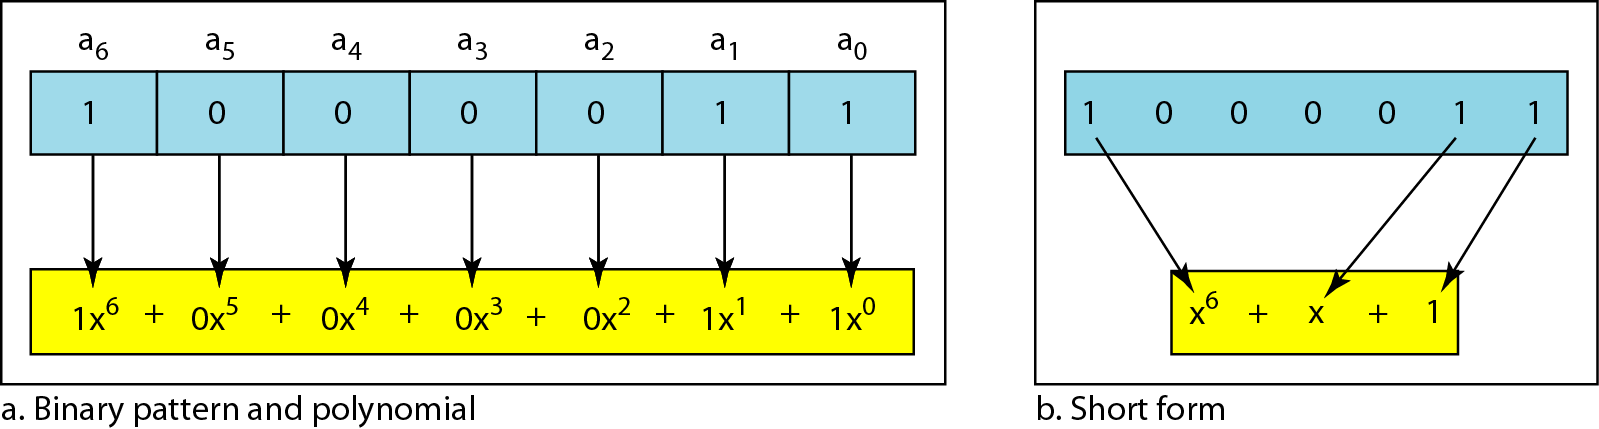 Ett block med k bitar (dataword) representeras av